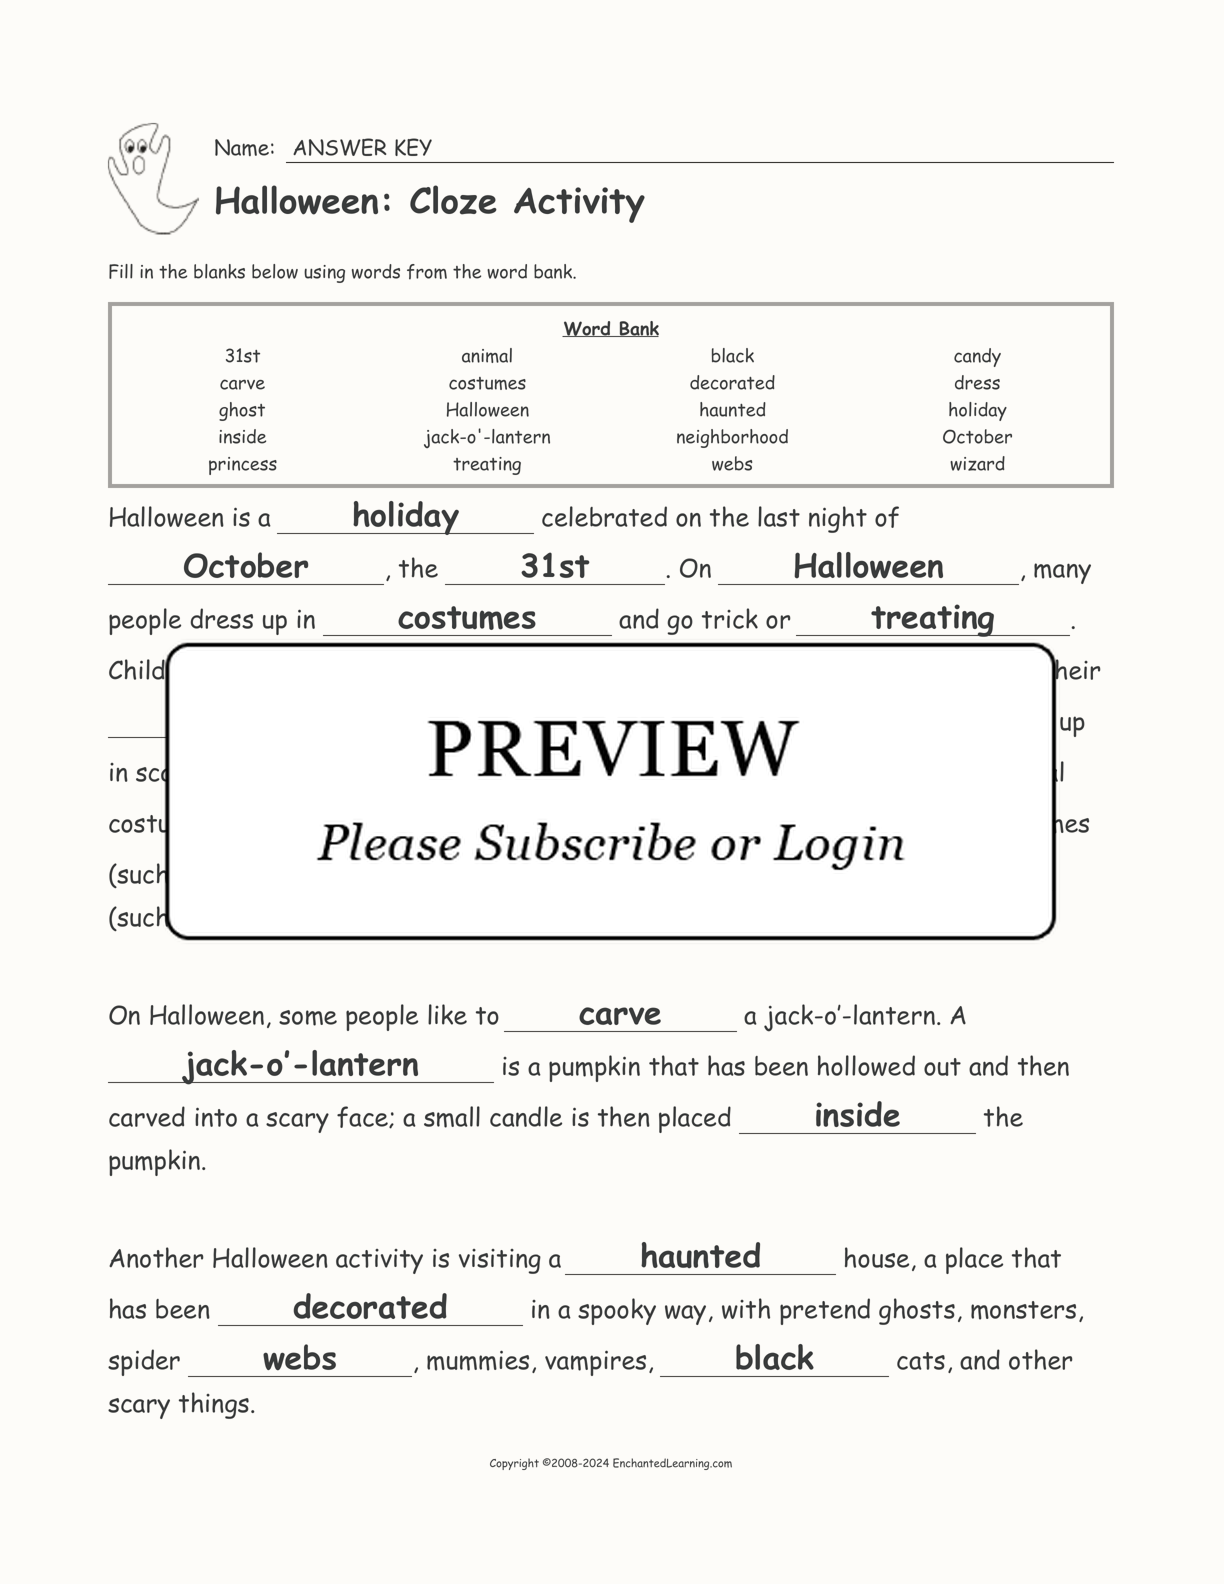 Halloween: Cloze Activity interactive worksheet page 2